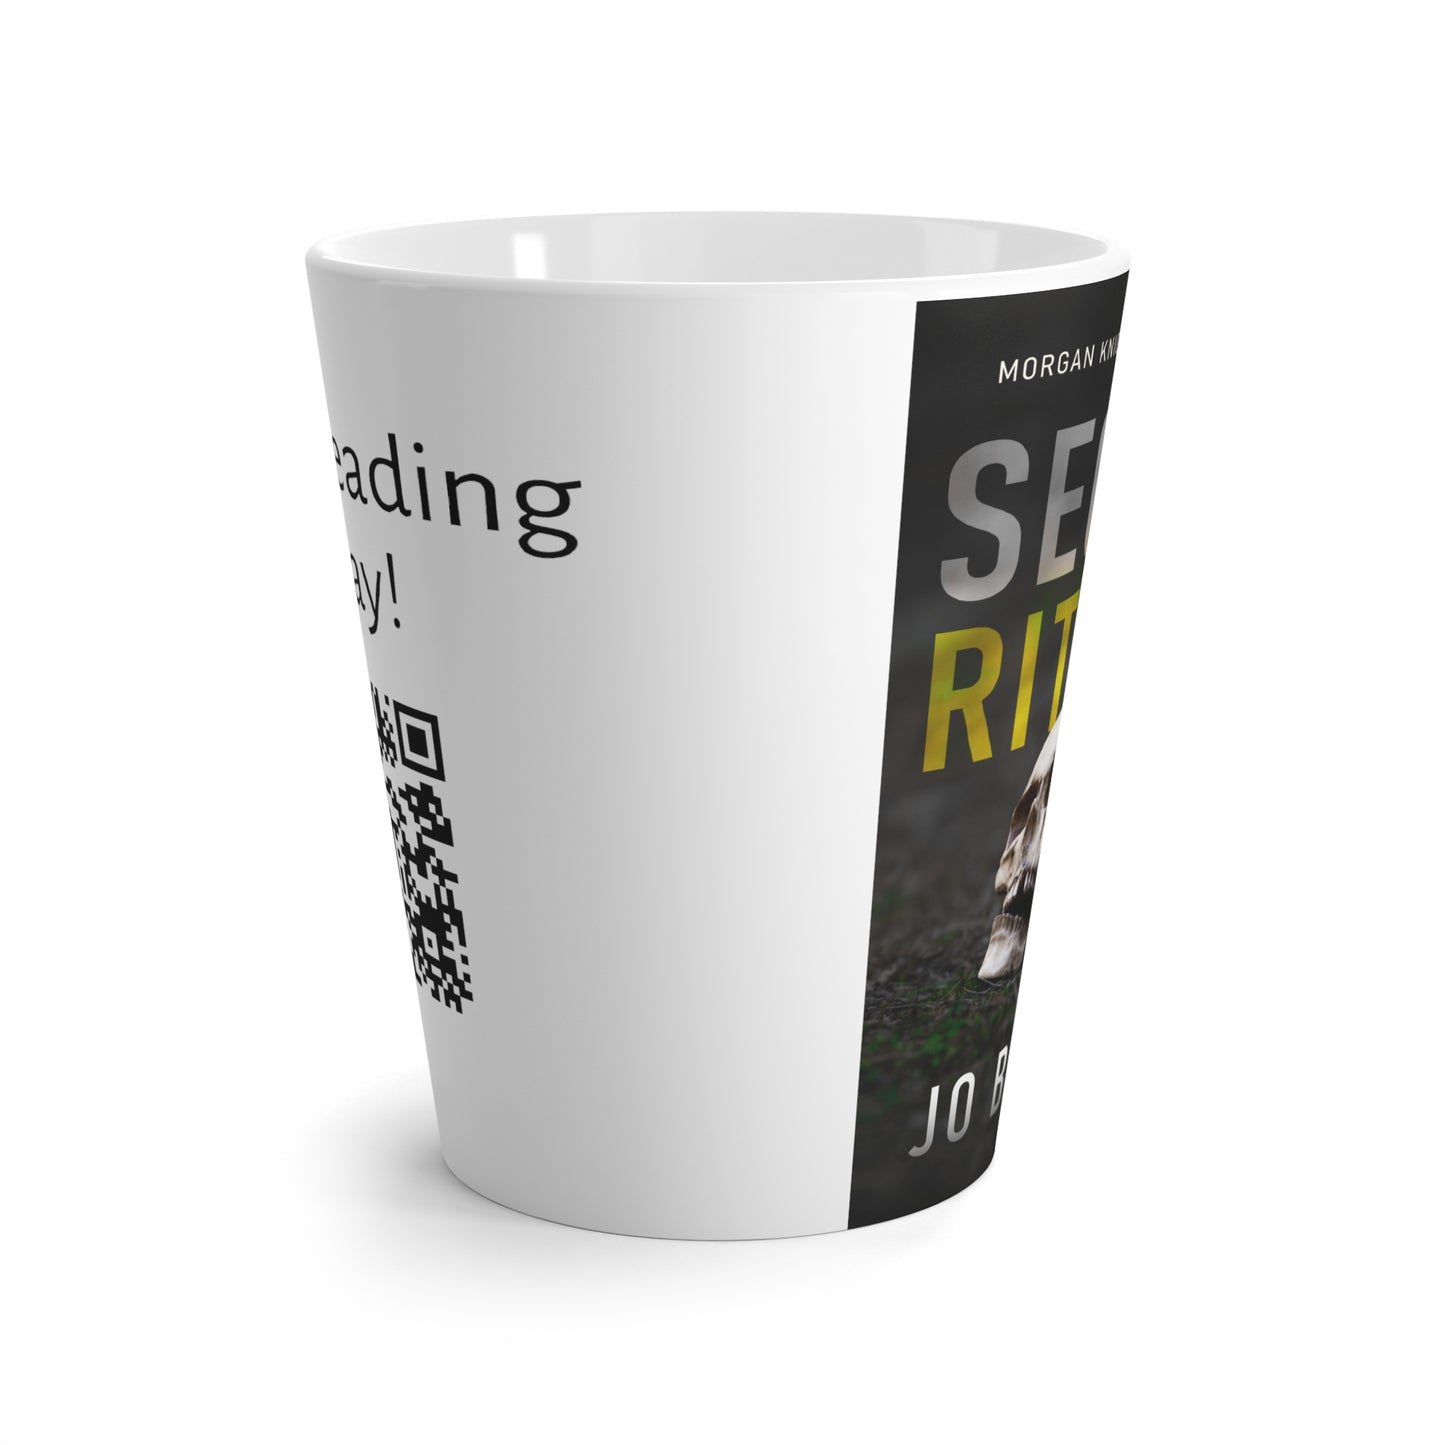 Secret Rituals - Latte Mug